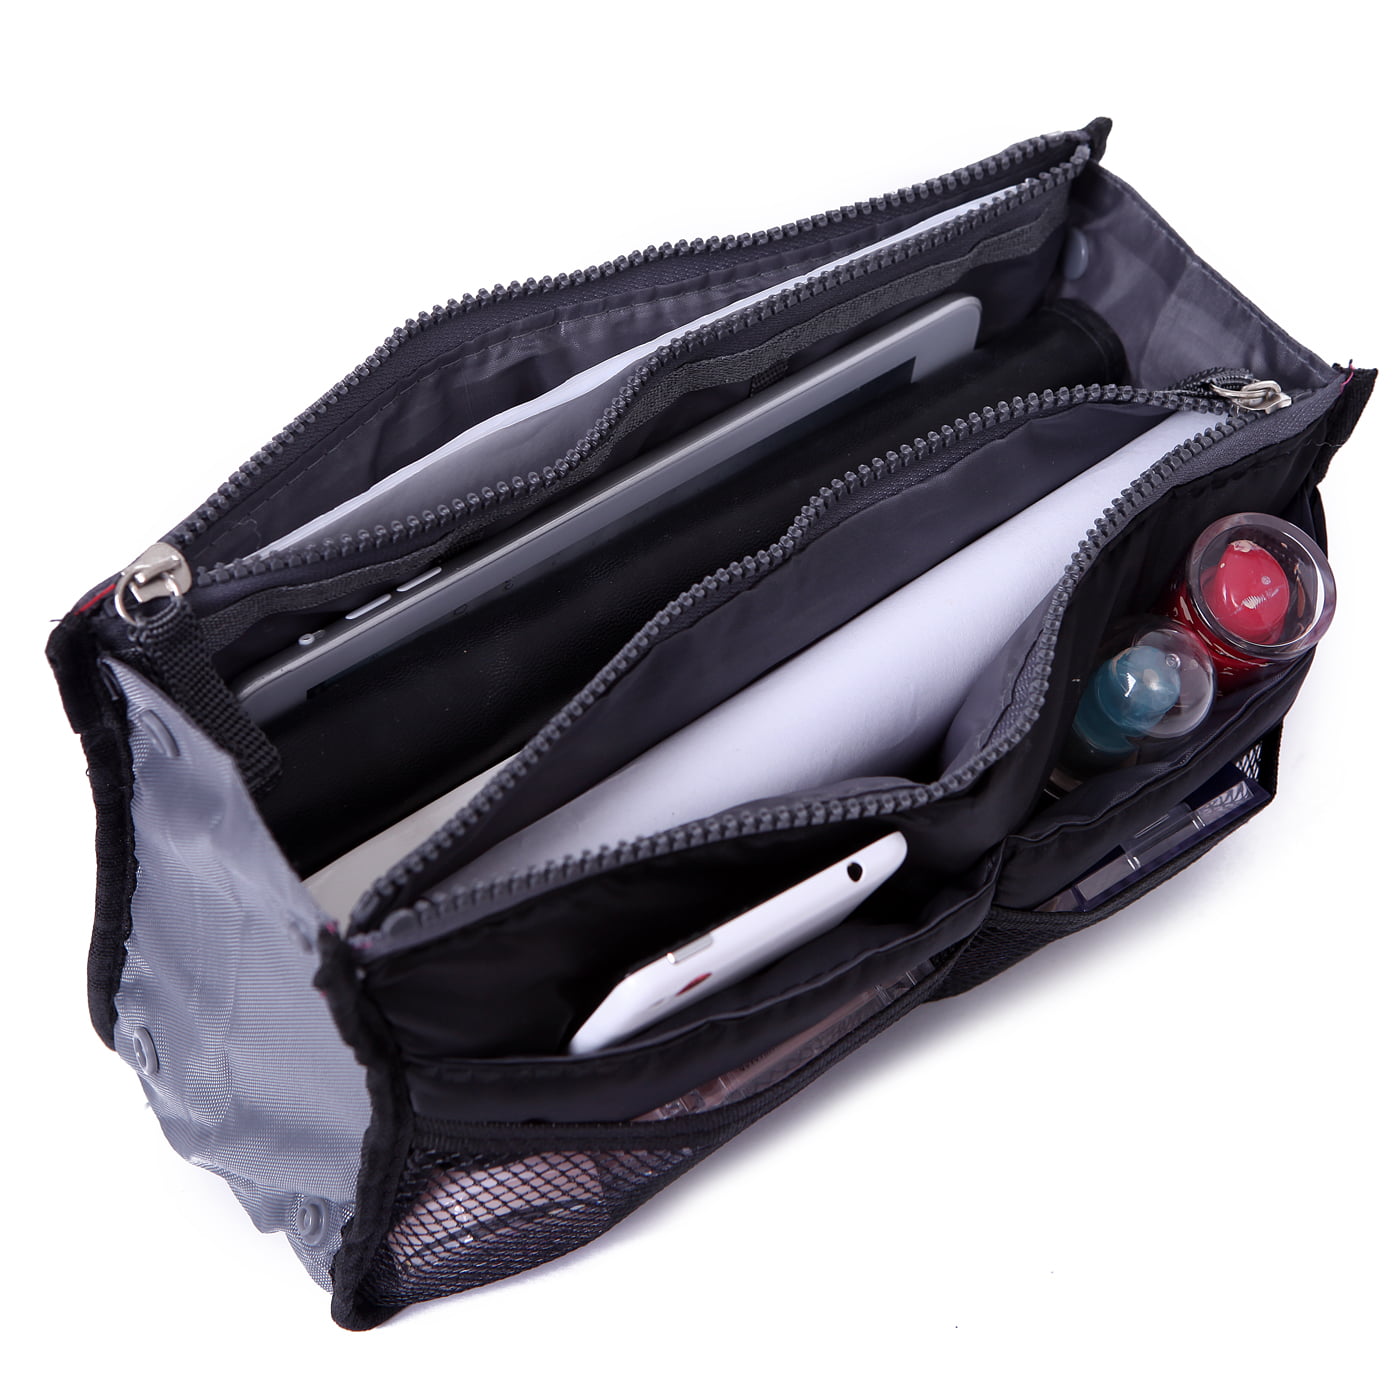 Expandable 13 Pocket Handbag Insert Purse Organizer with Handles (Black) - comicsahoy.com